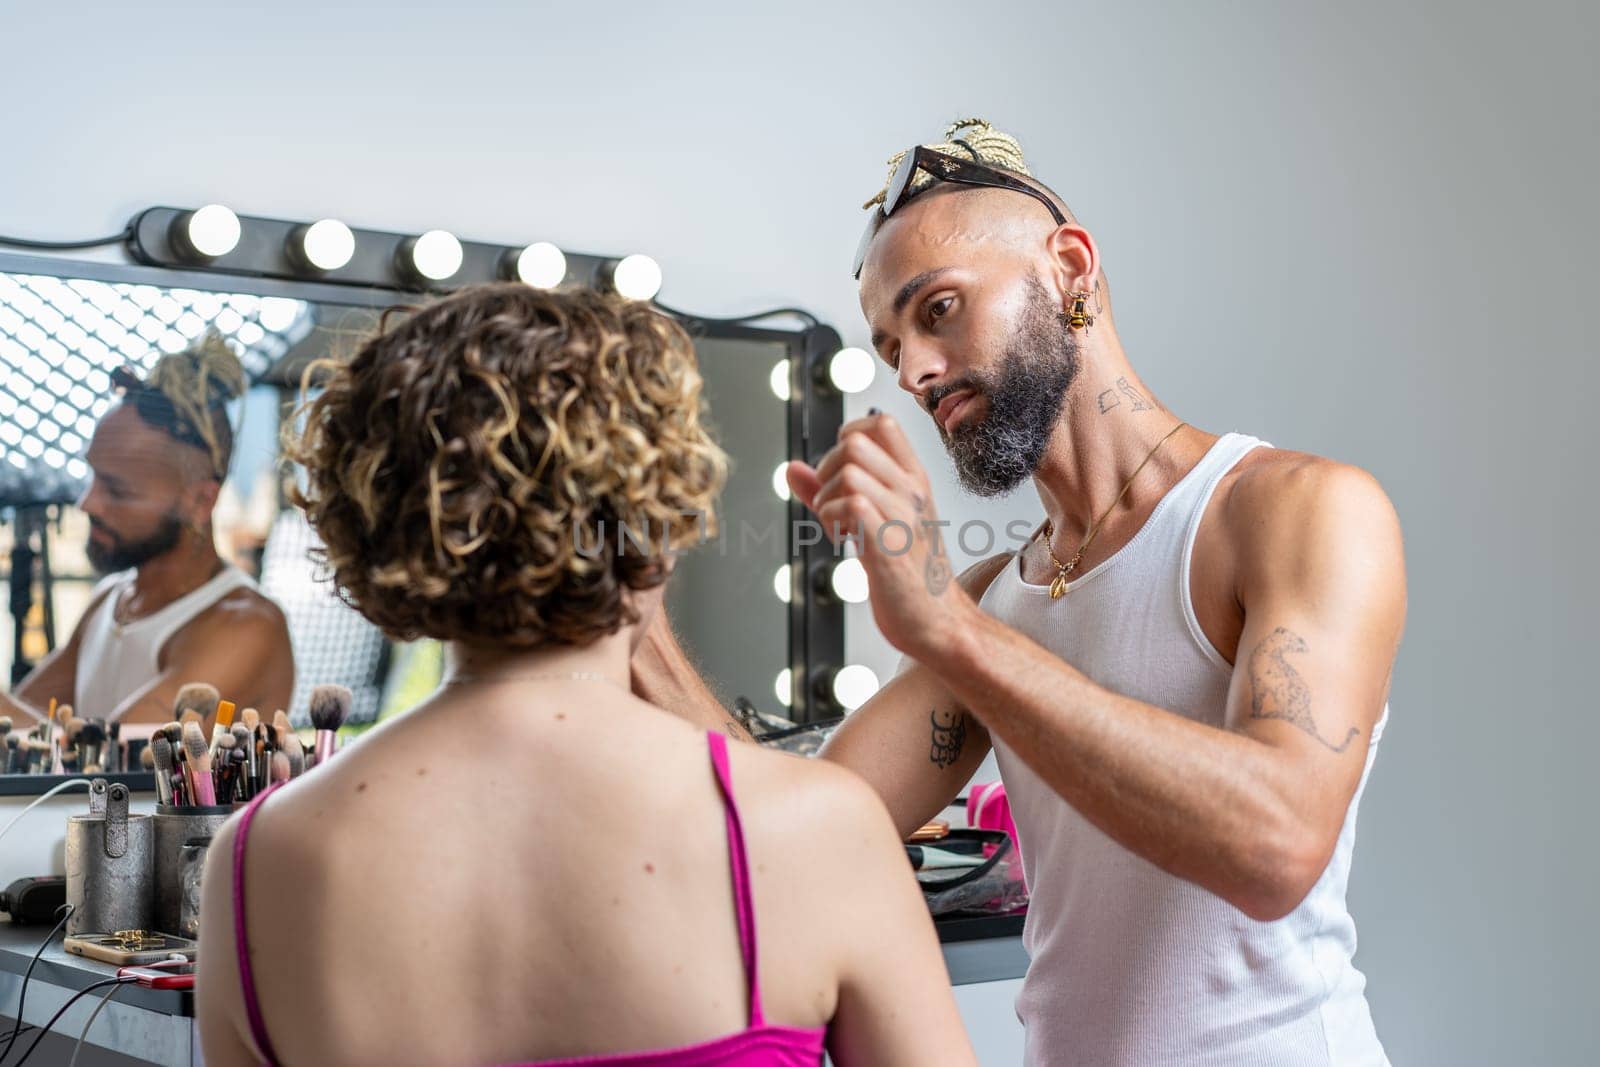 Gay man applying makeup on woman in studio by andreonegin